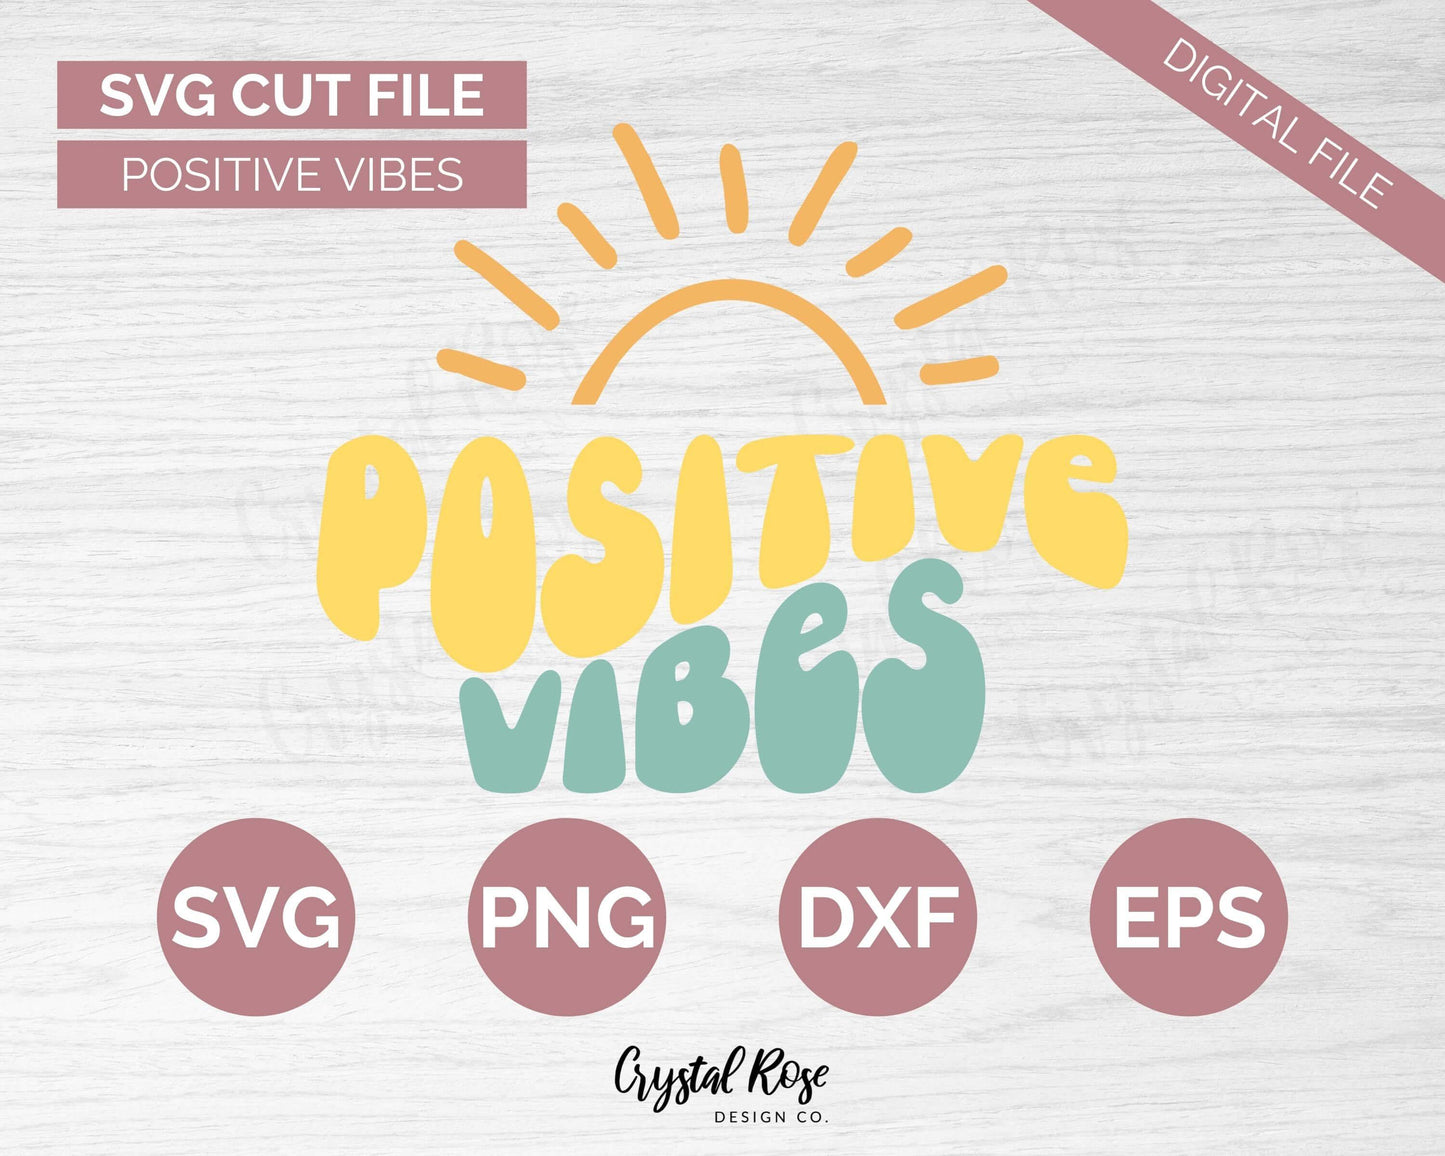 Retro Positive Vibes SVG, Inspirational SVG, Digital Download, Cricut, Silhouette, Glowforge (includes svg/png/dxf/eps) - Crystal Rose Design Co.